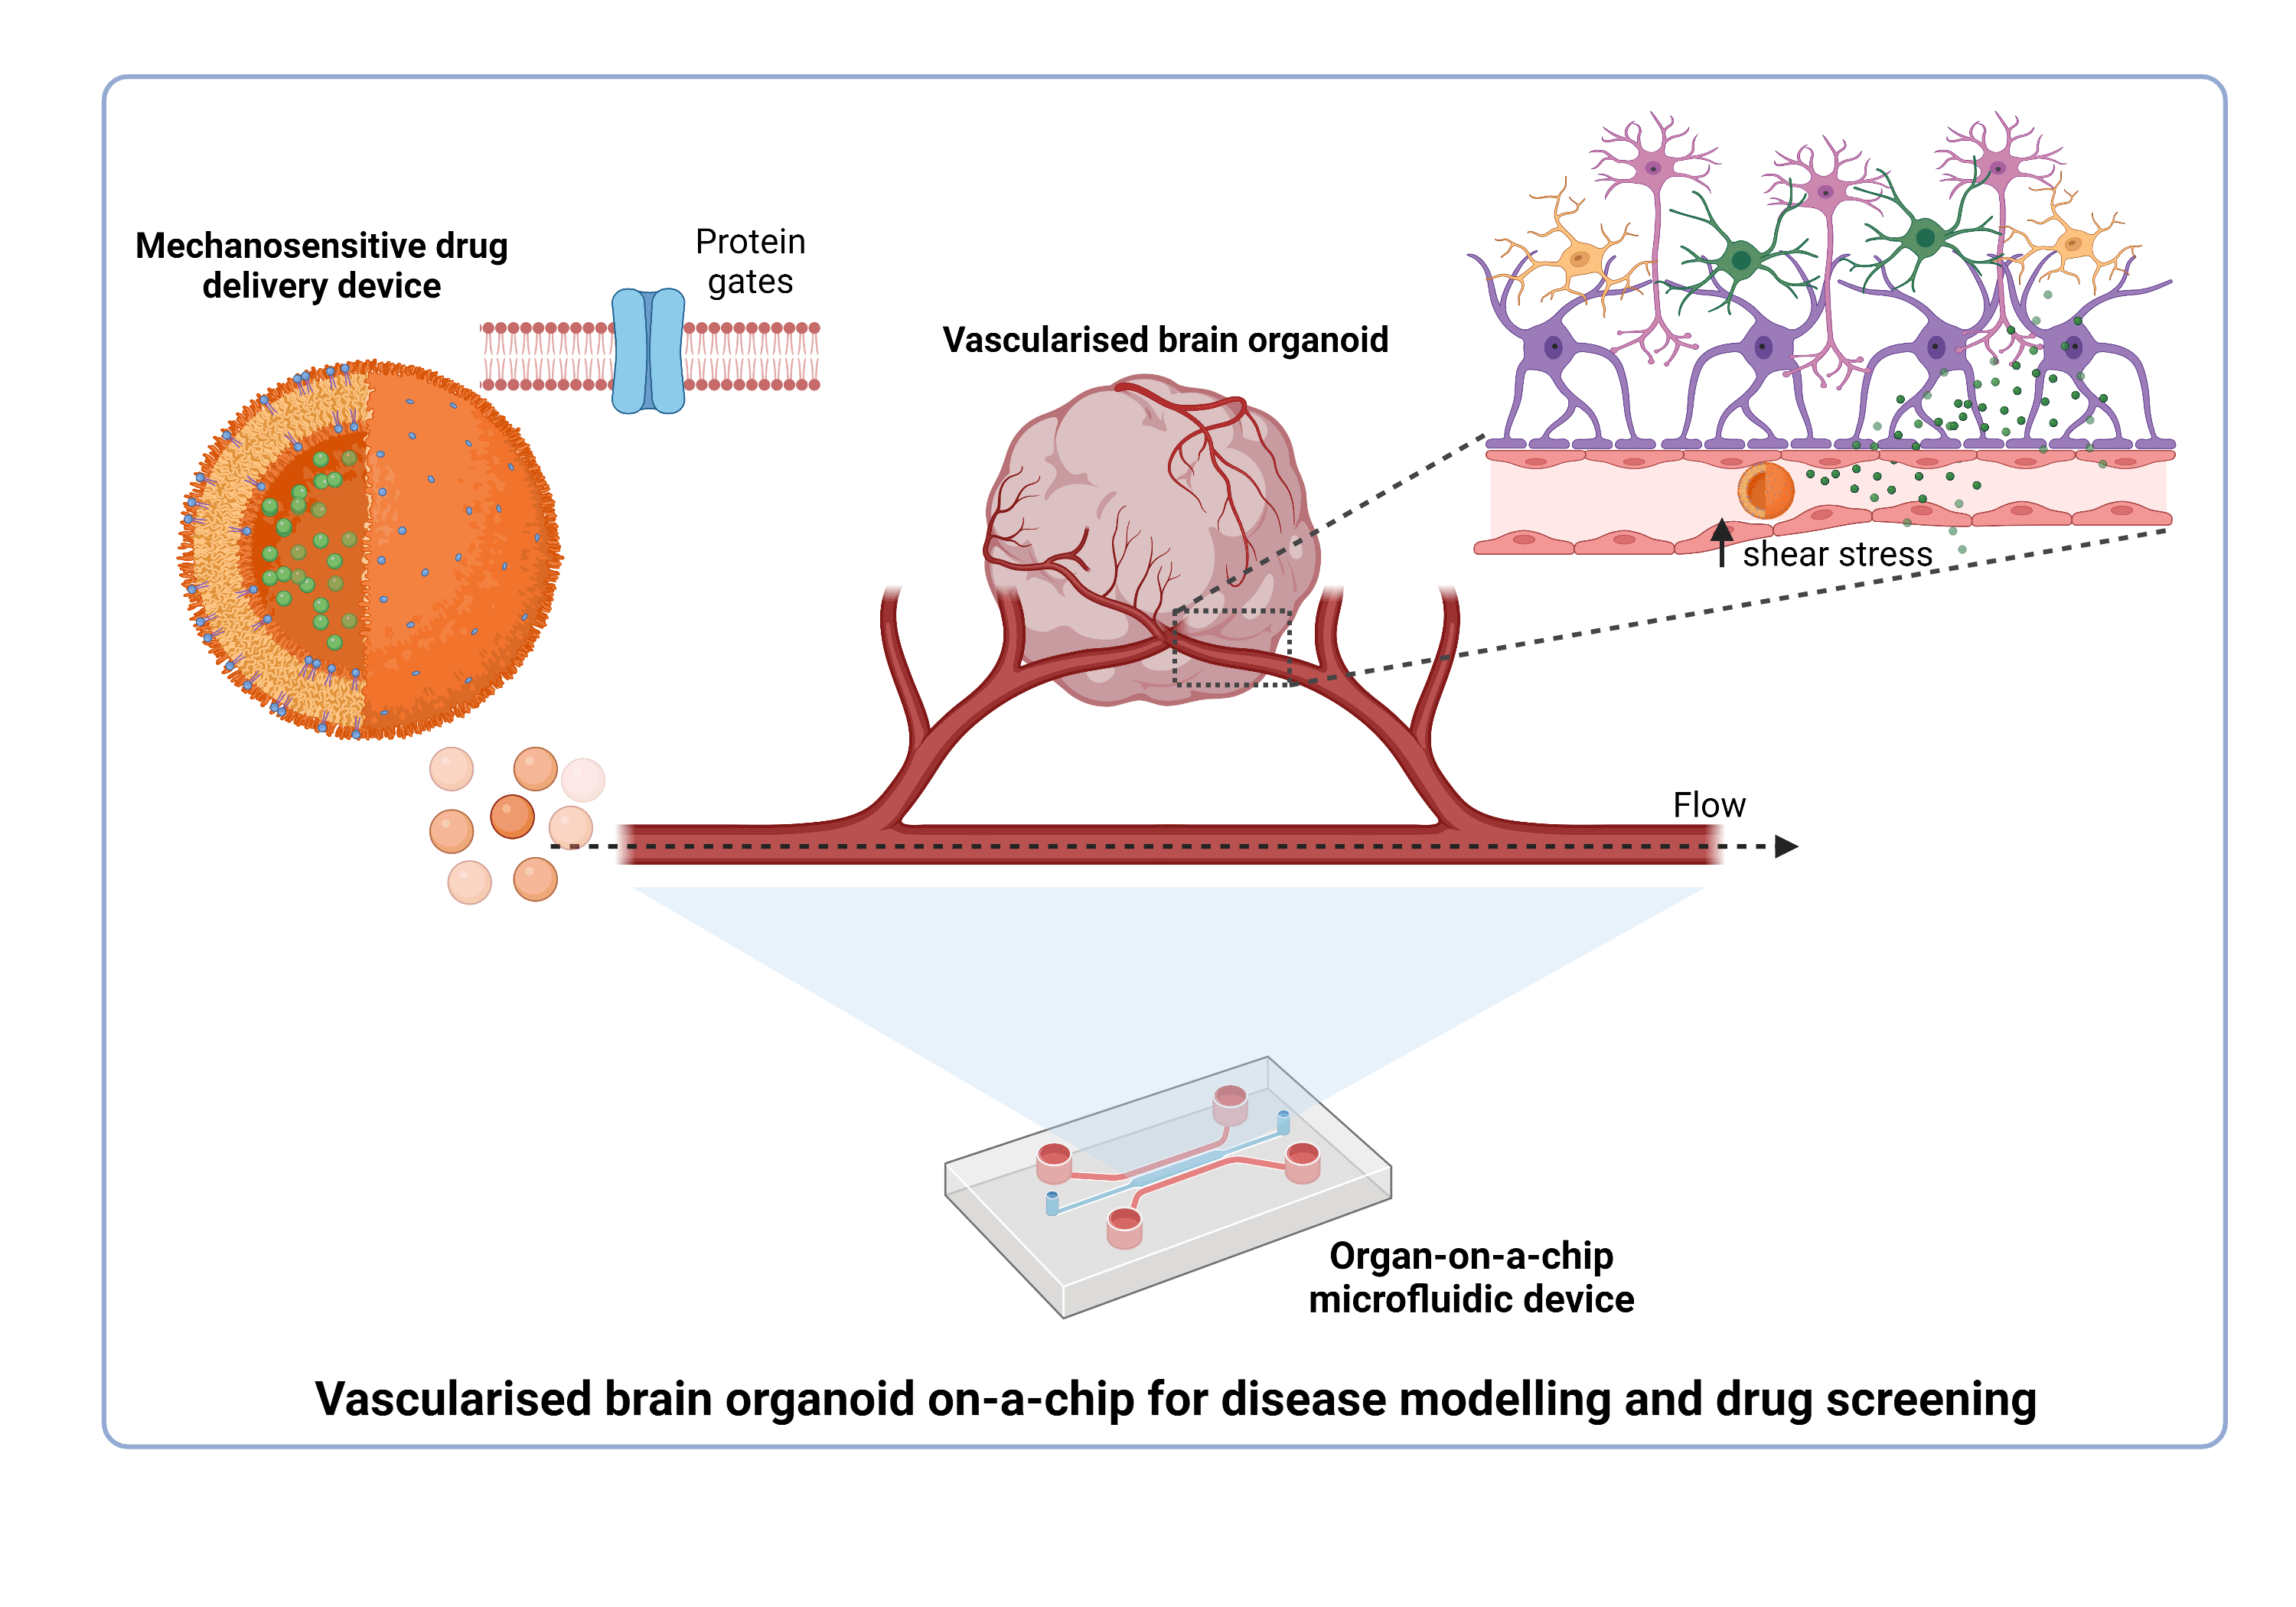 Figure 1. Vascularised brain organoid on-a-chip for disease modelling and drug screening